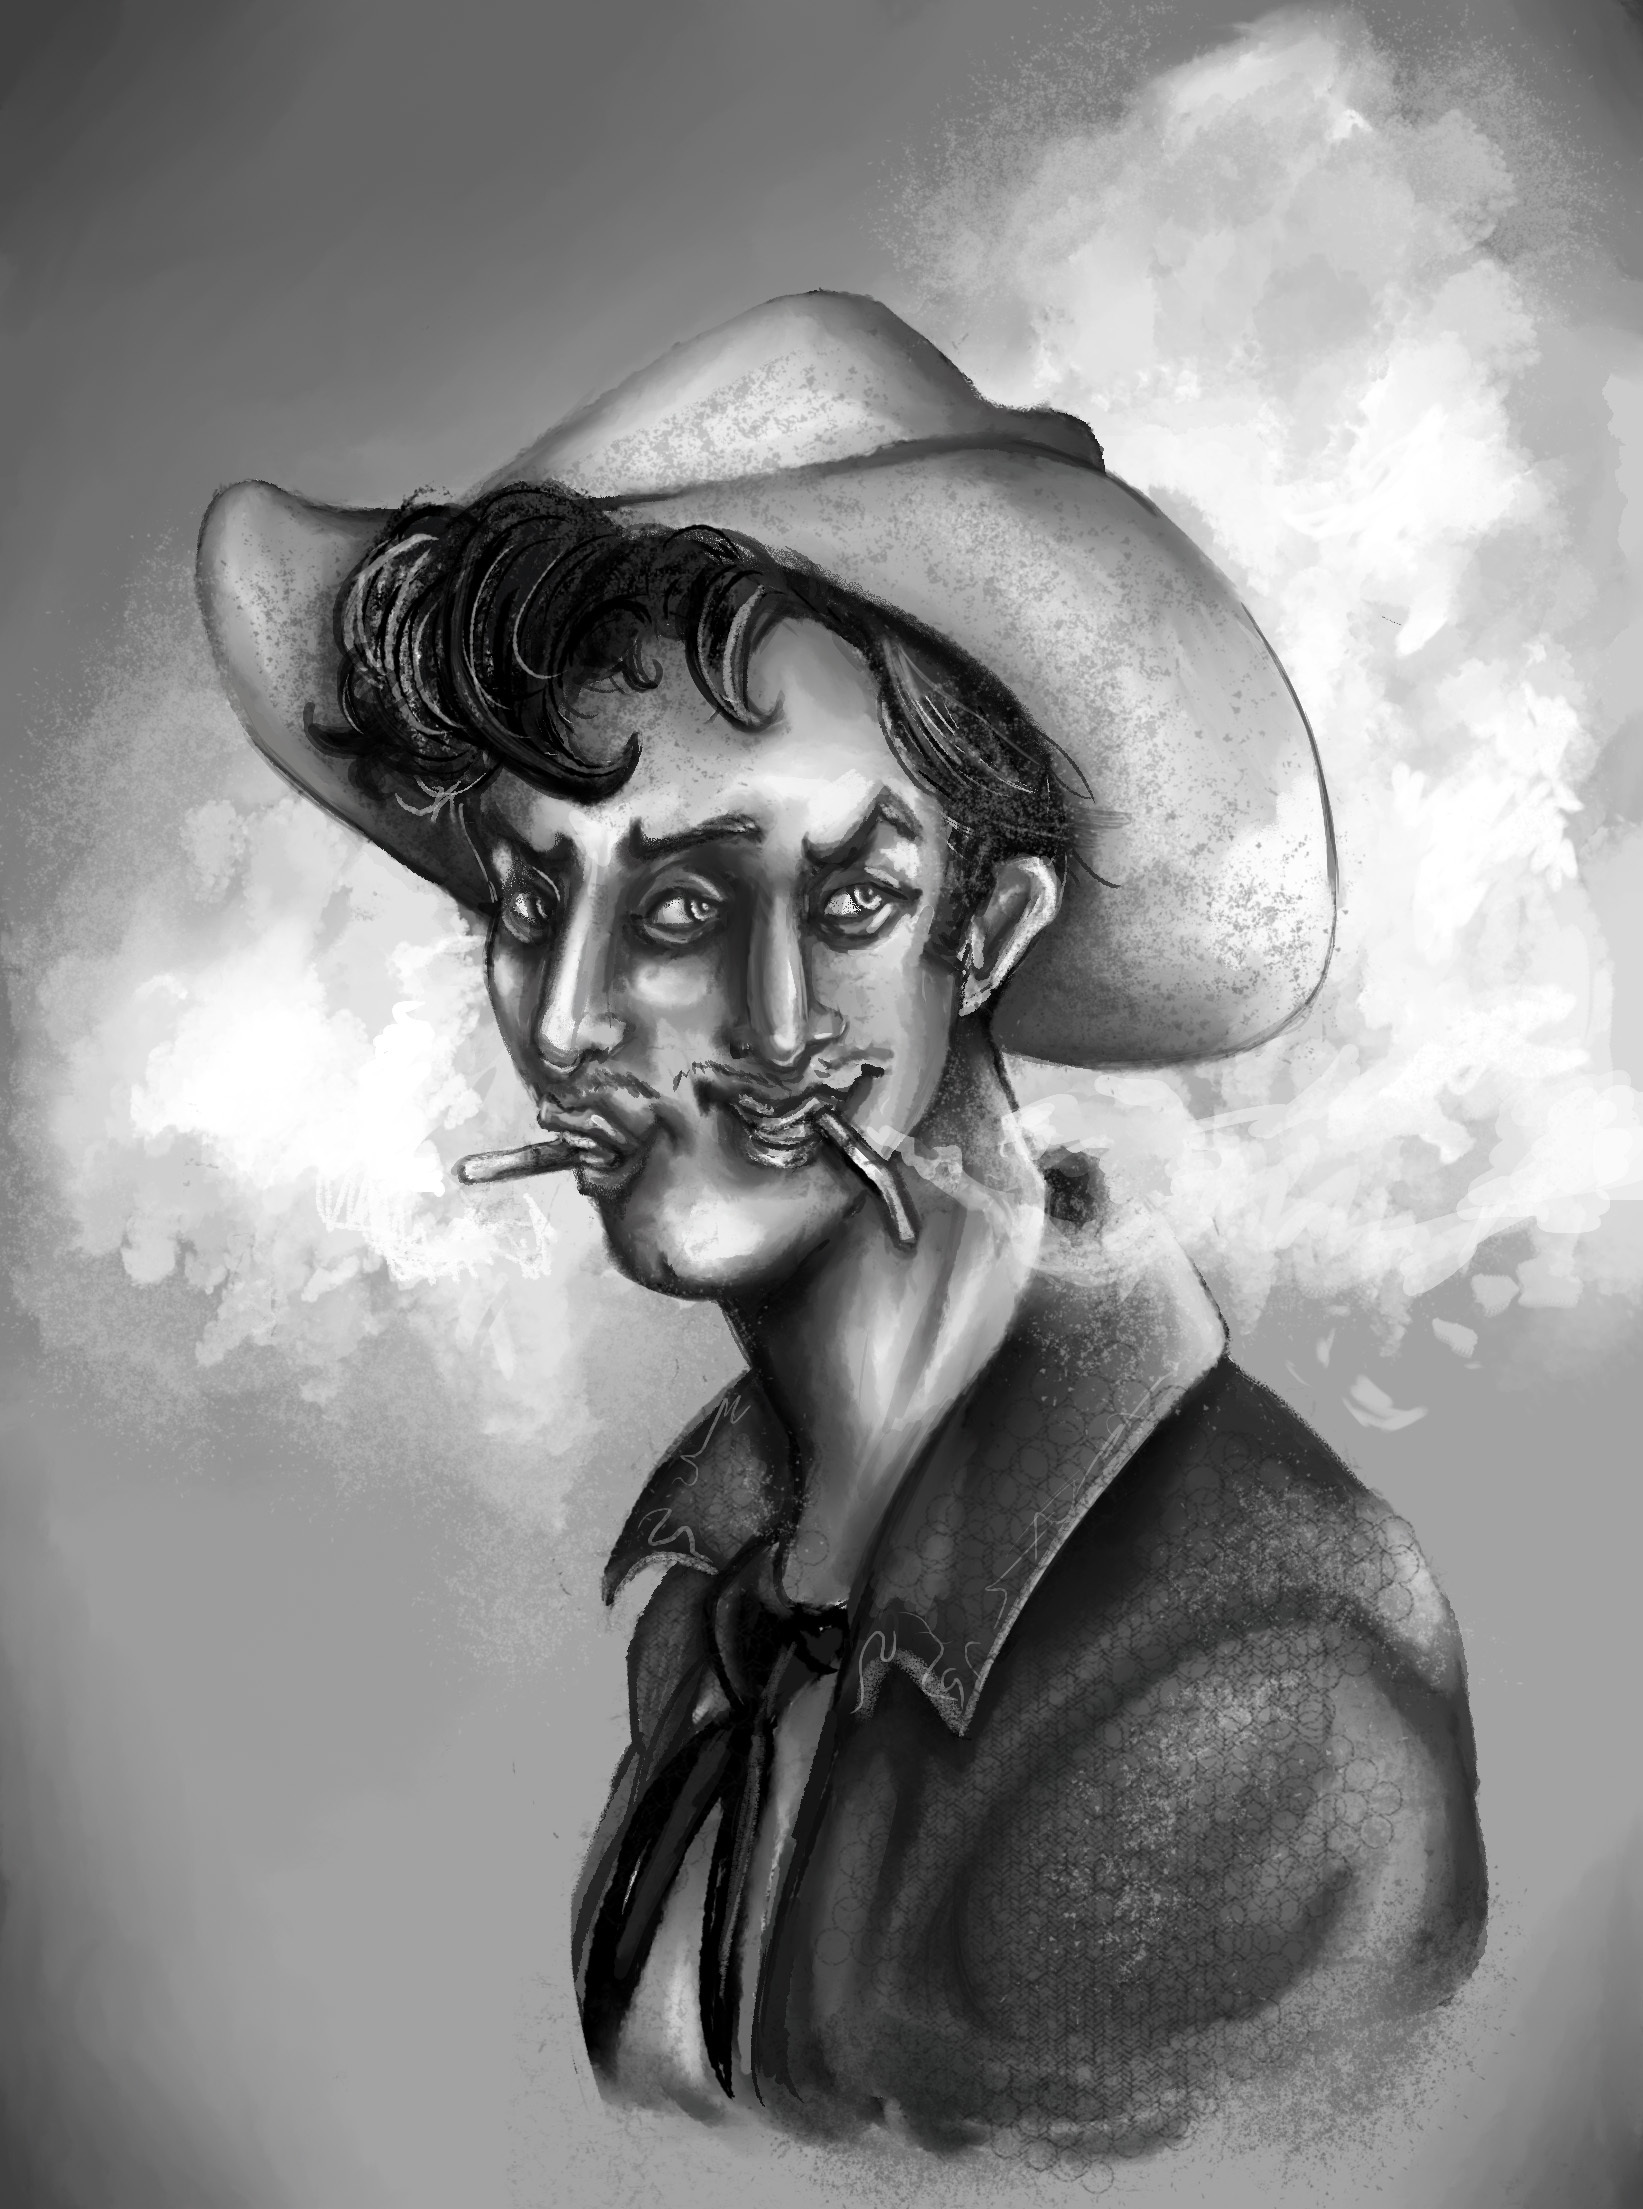 Jordan Wright art titled No Good Two-Faced Drugstore Cowboy